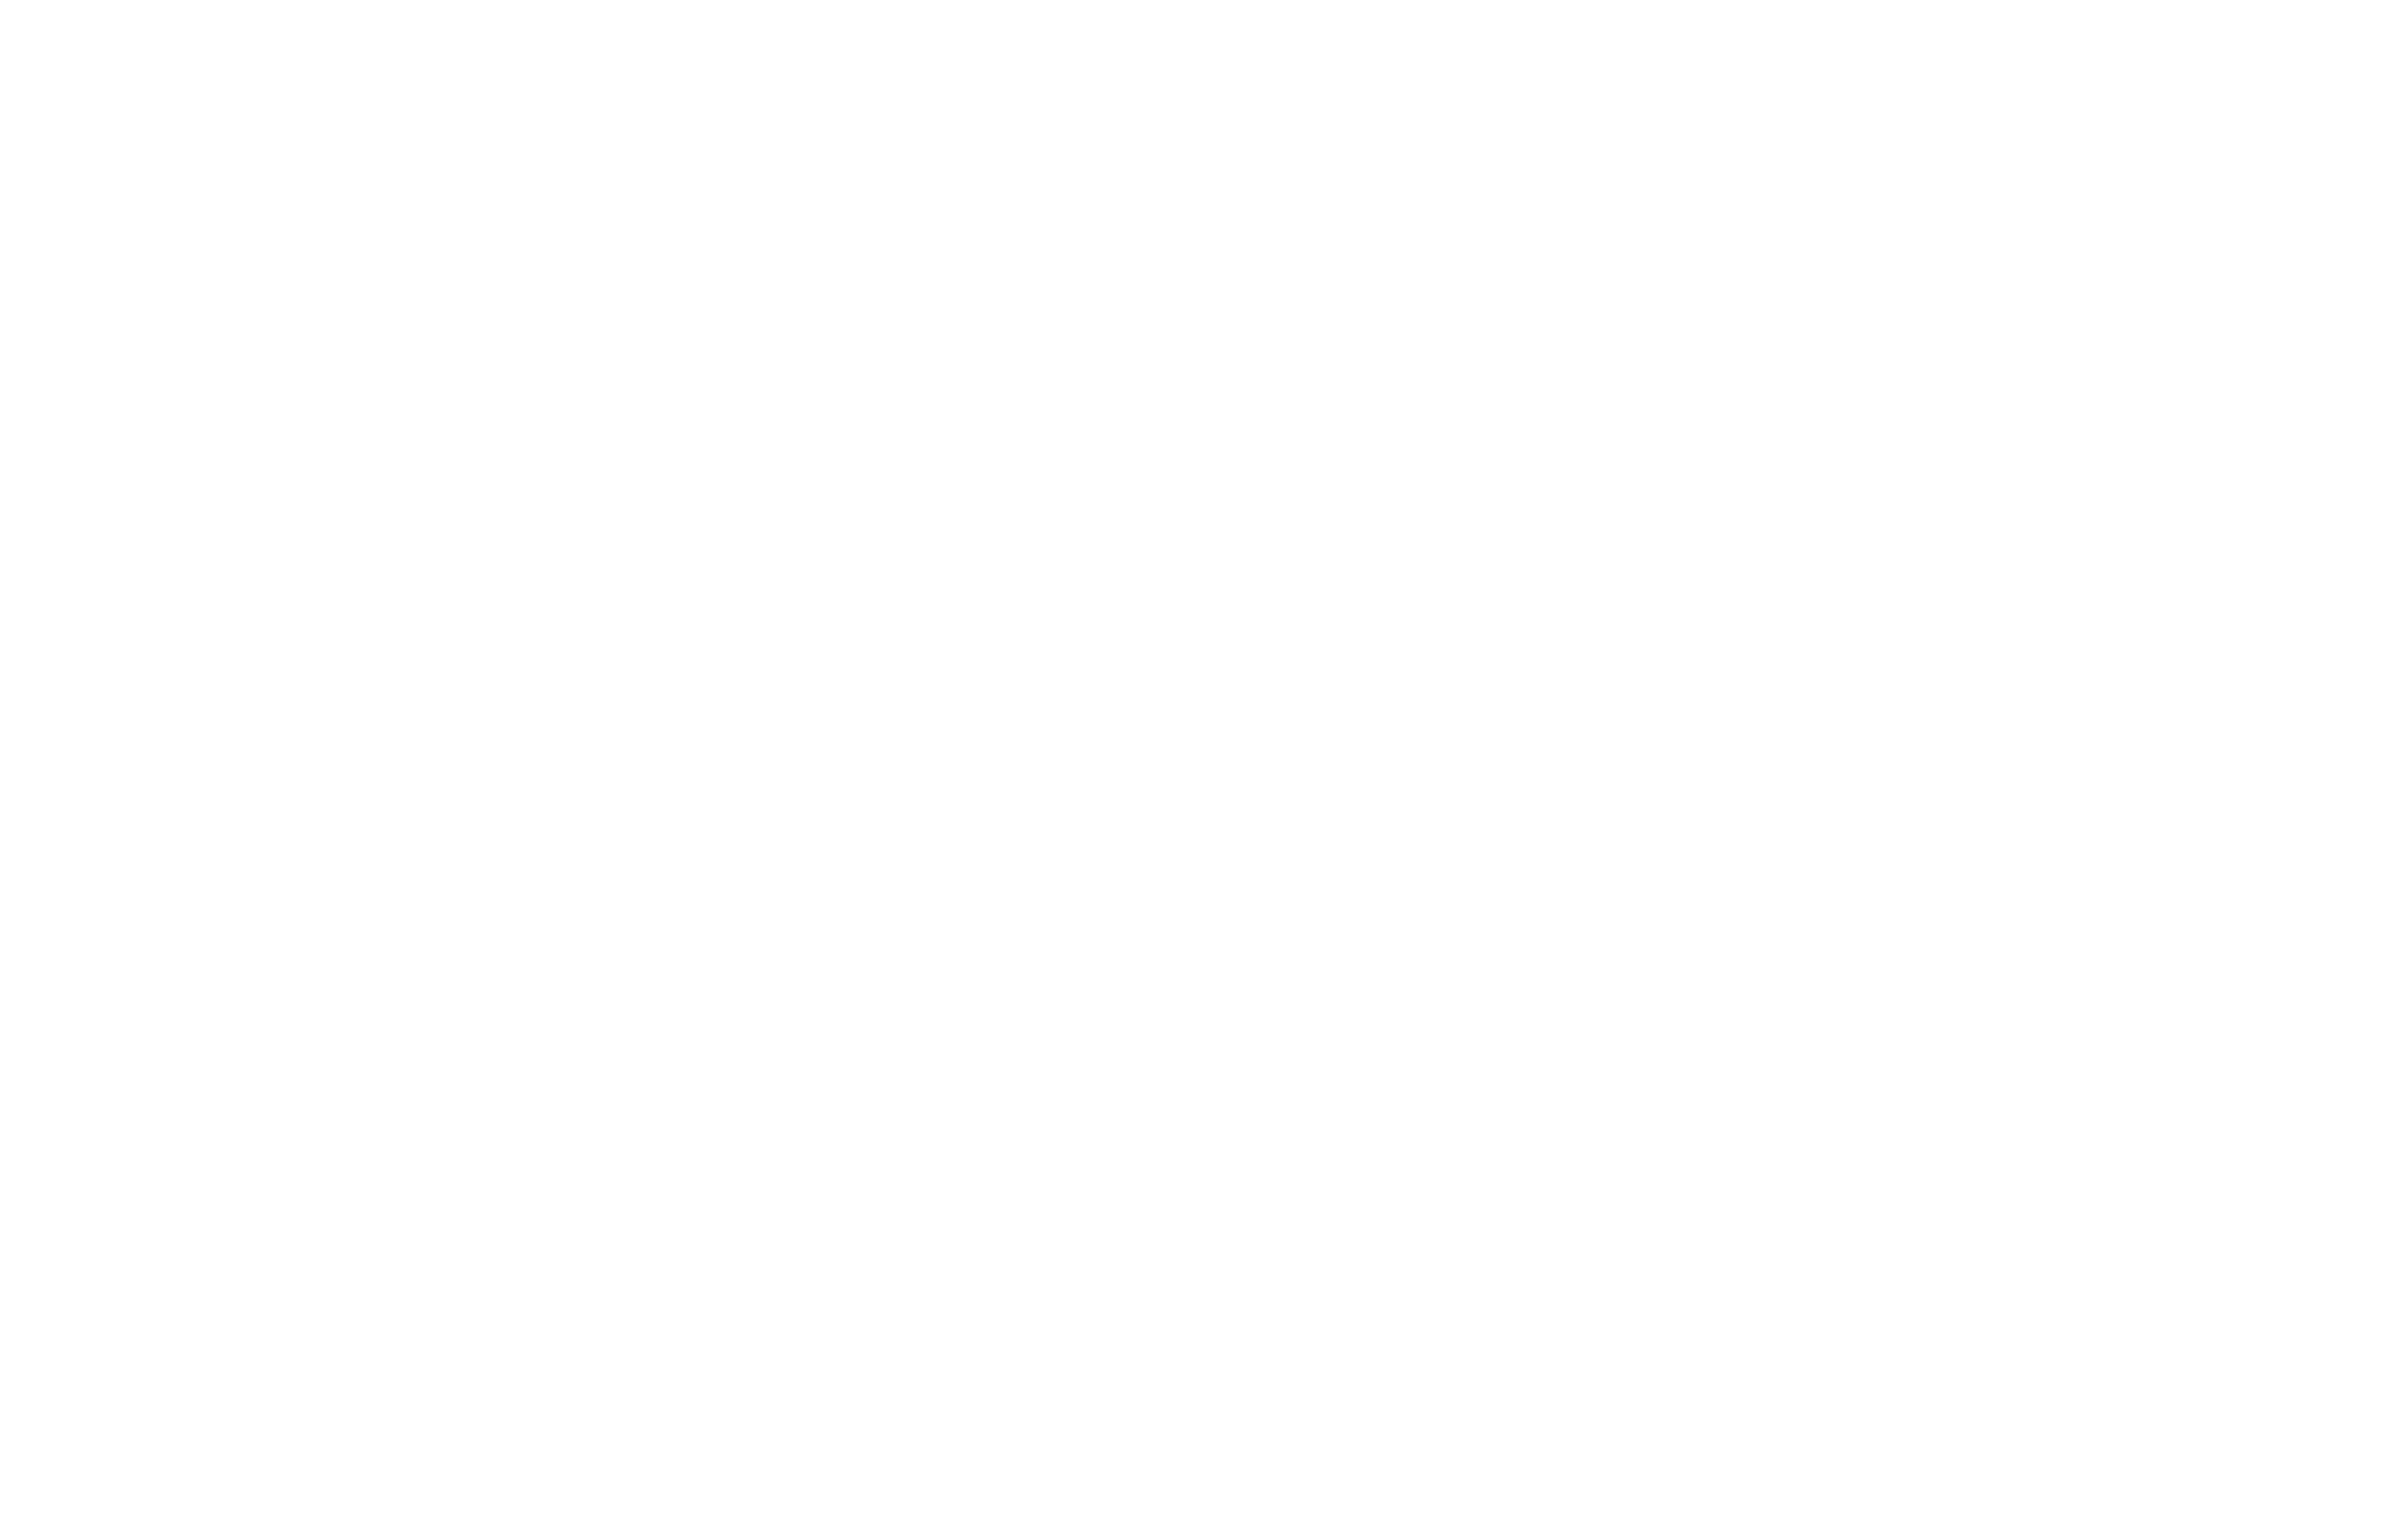 Witter.com